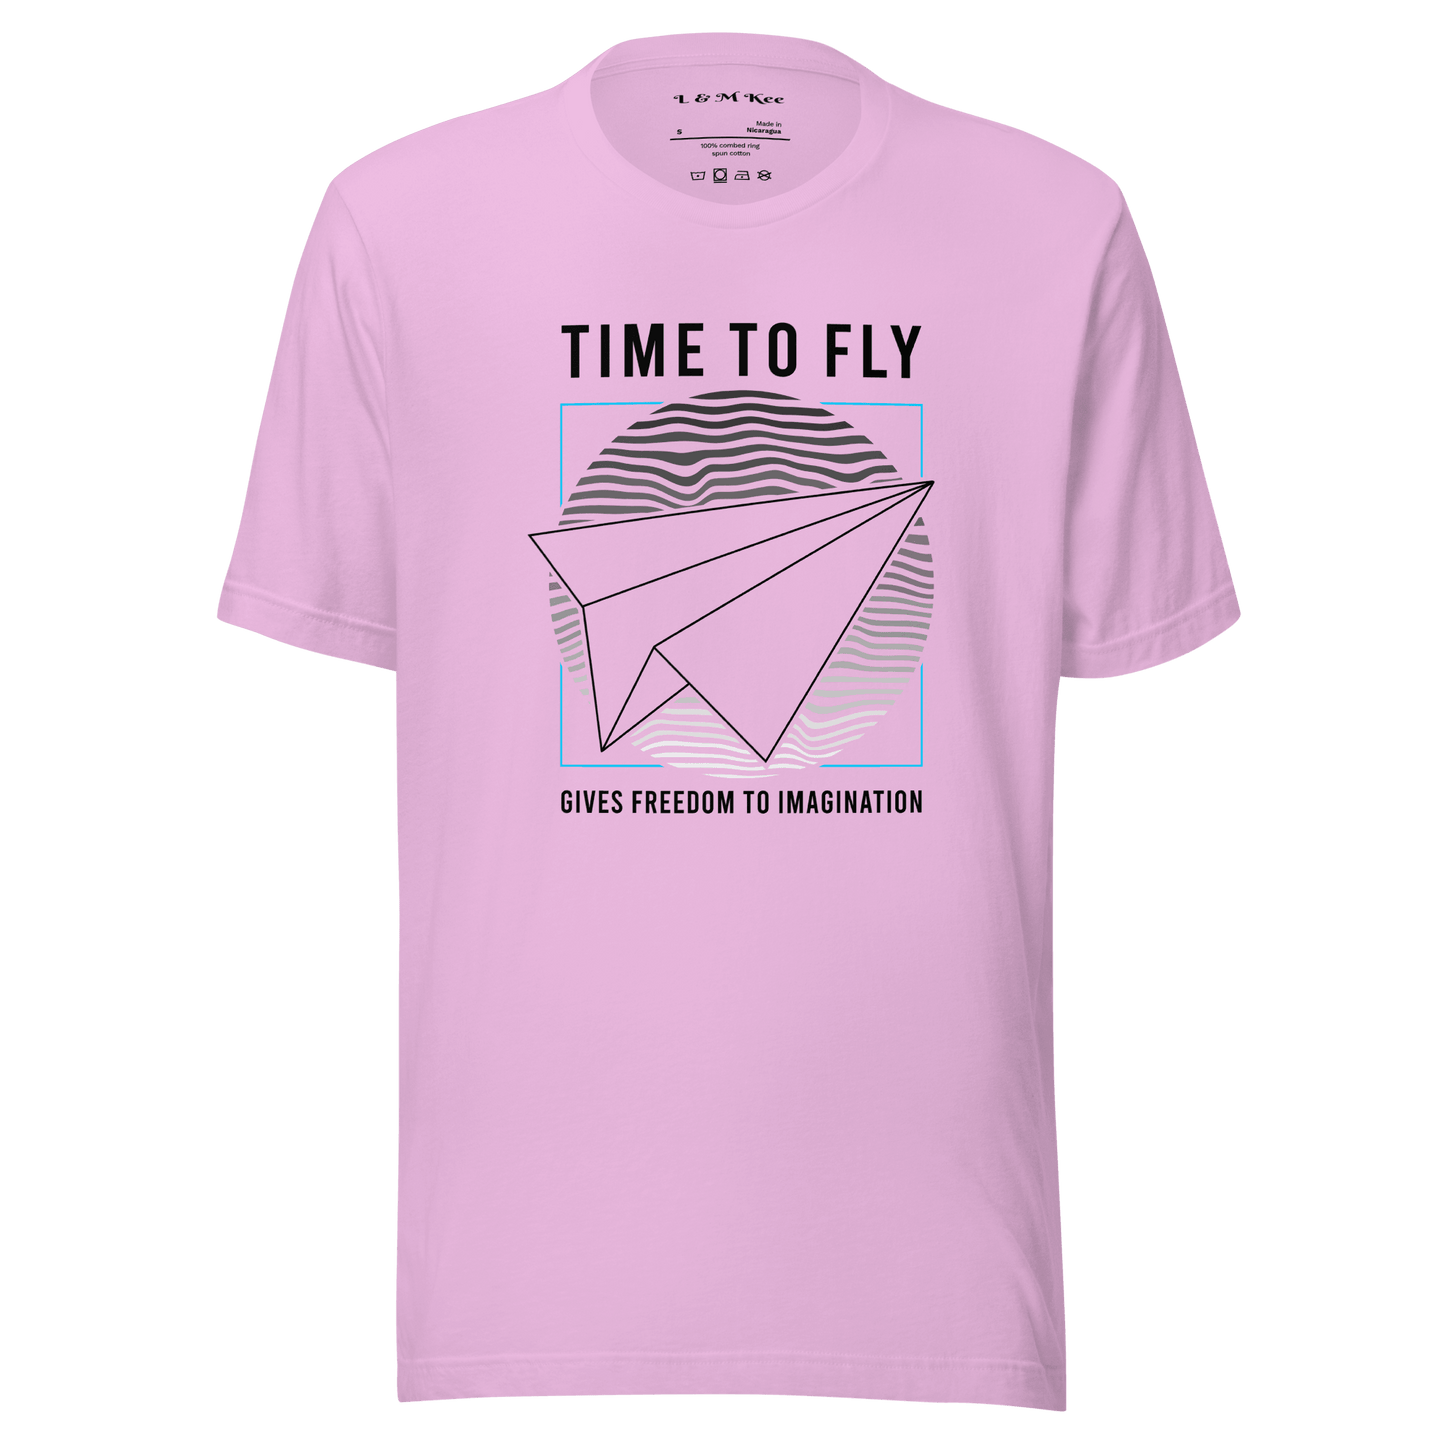 Time to Fly Streetwear Unisex t-shirt - L & M Kee, LLC